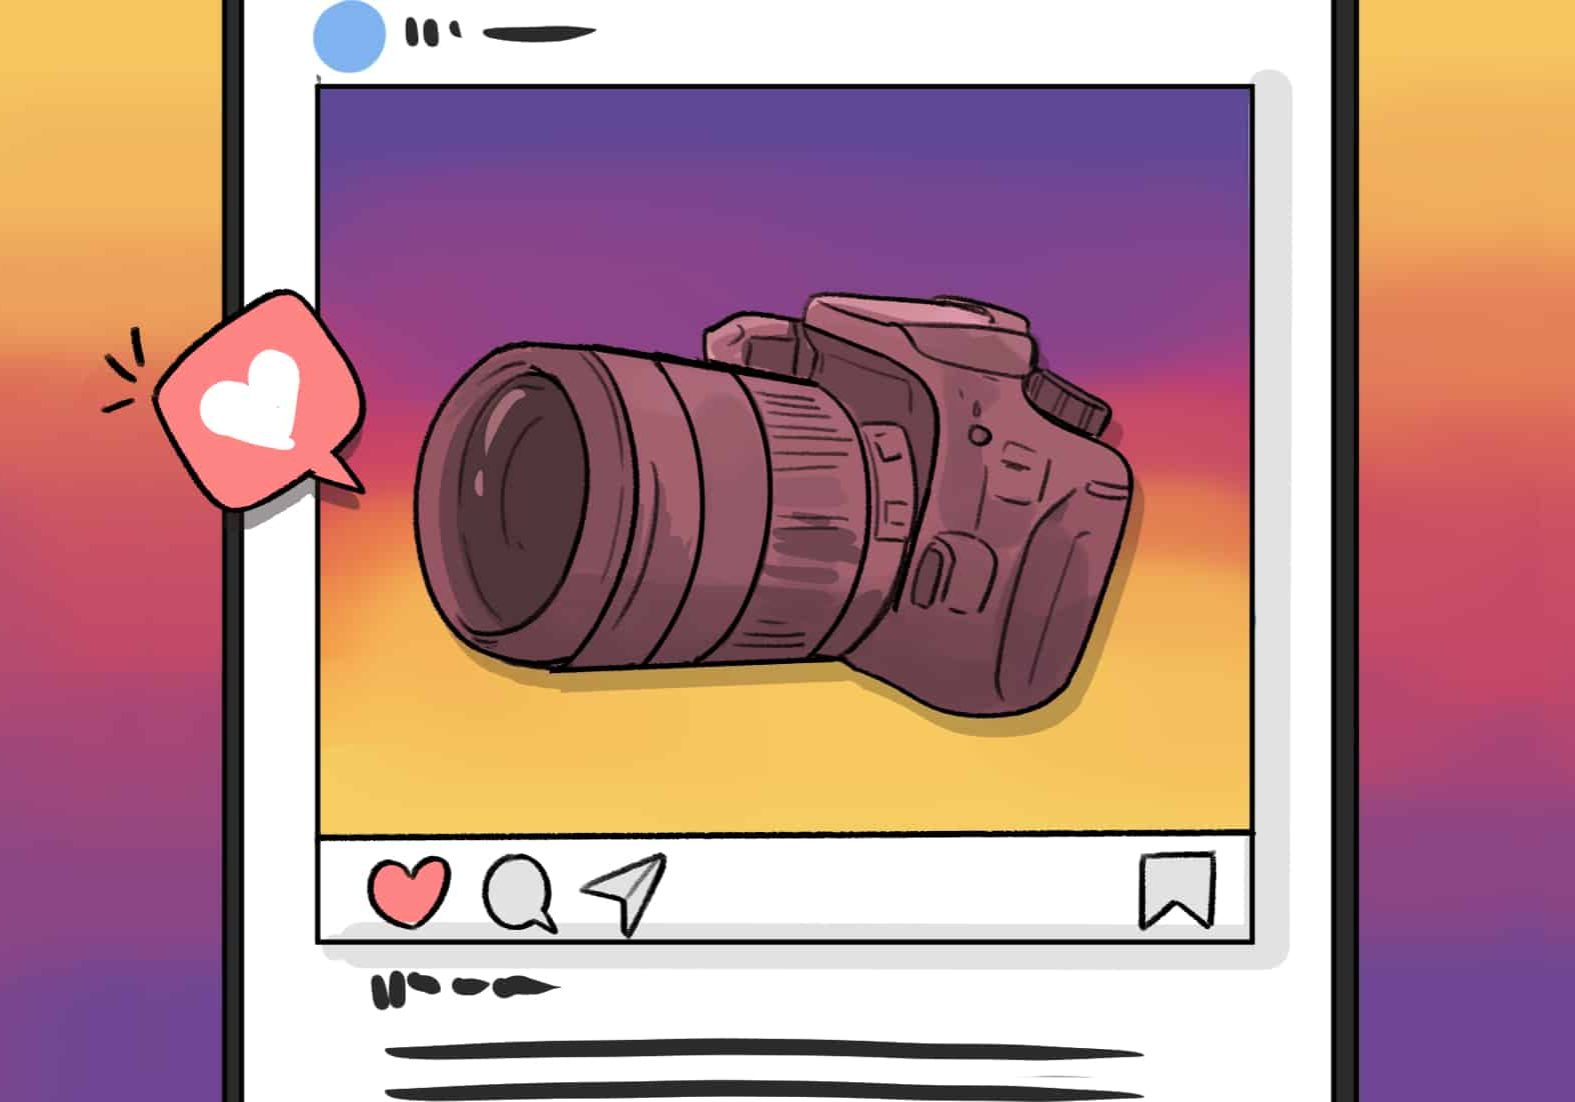 Best Camera for Instagram